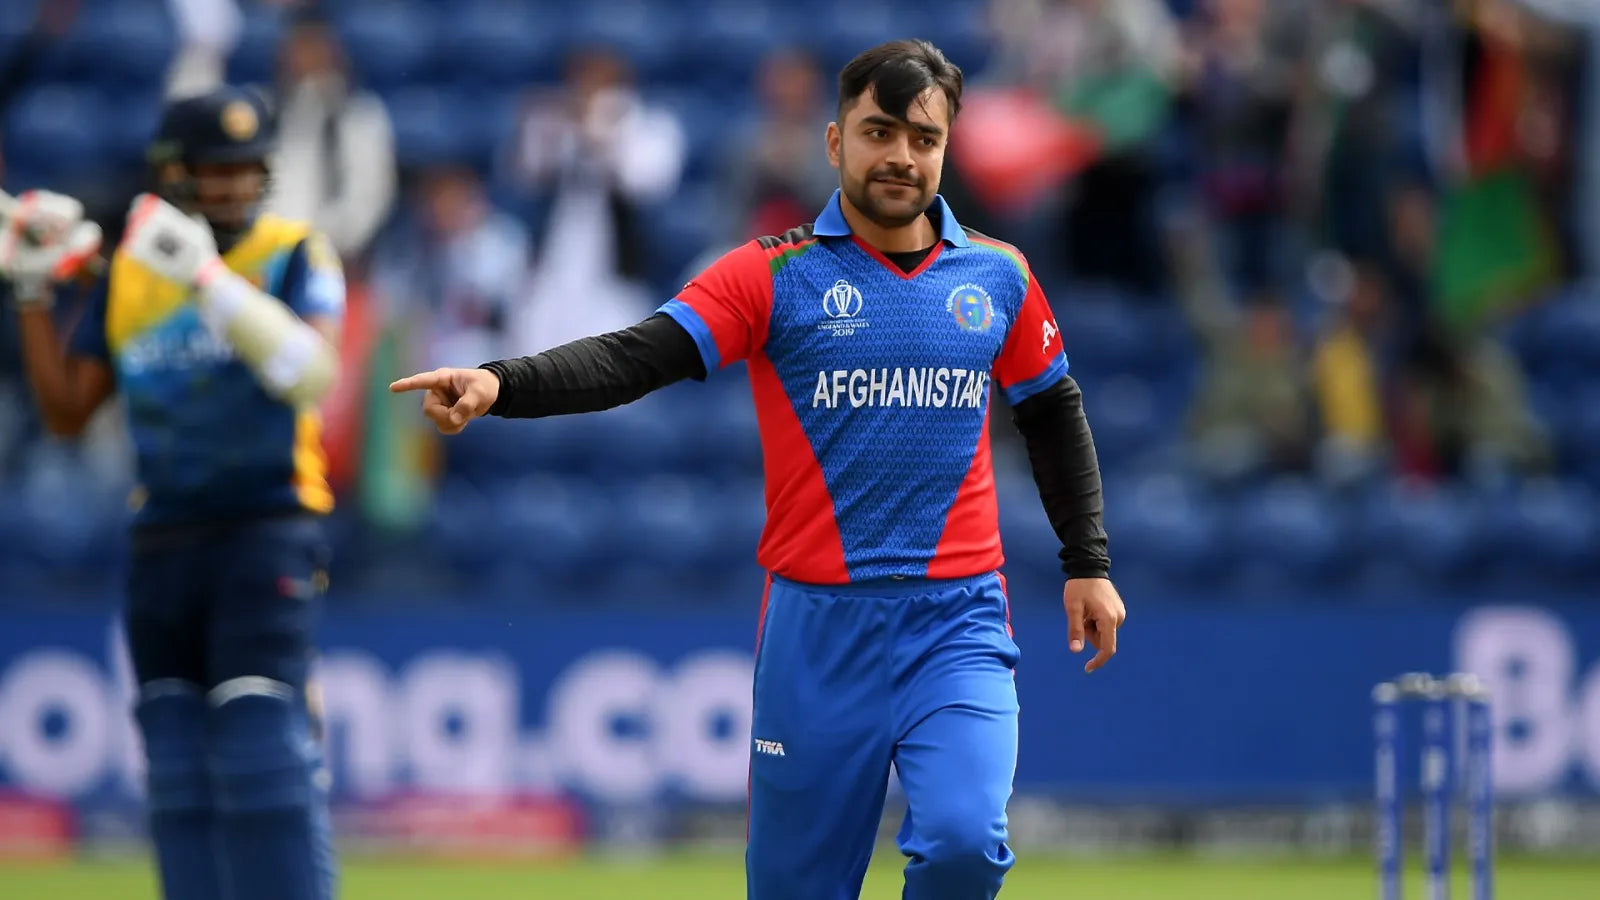 Rashid Khan celebrates after taking a wicket